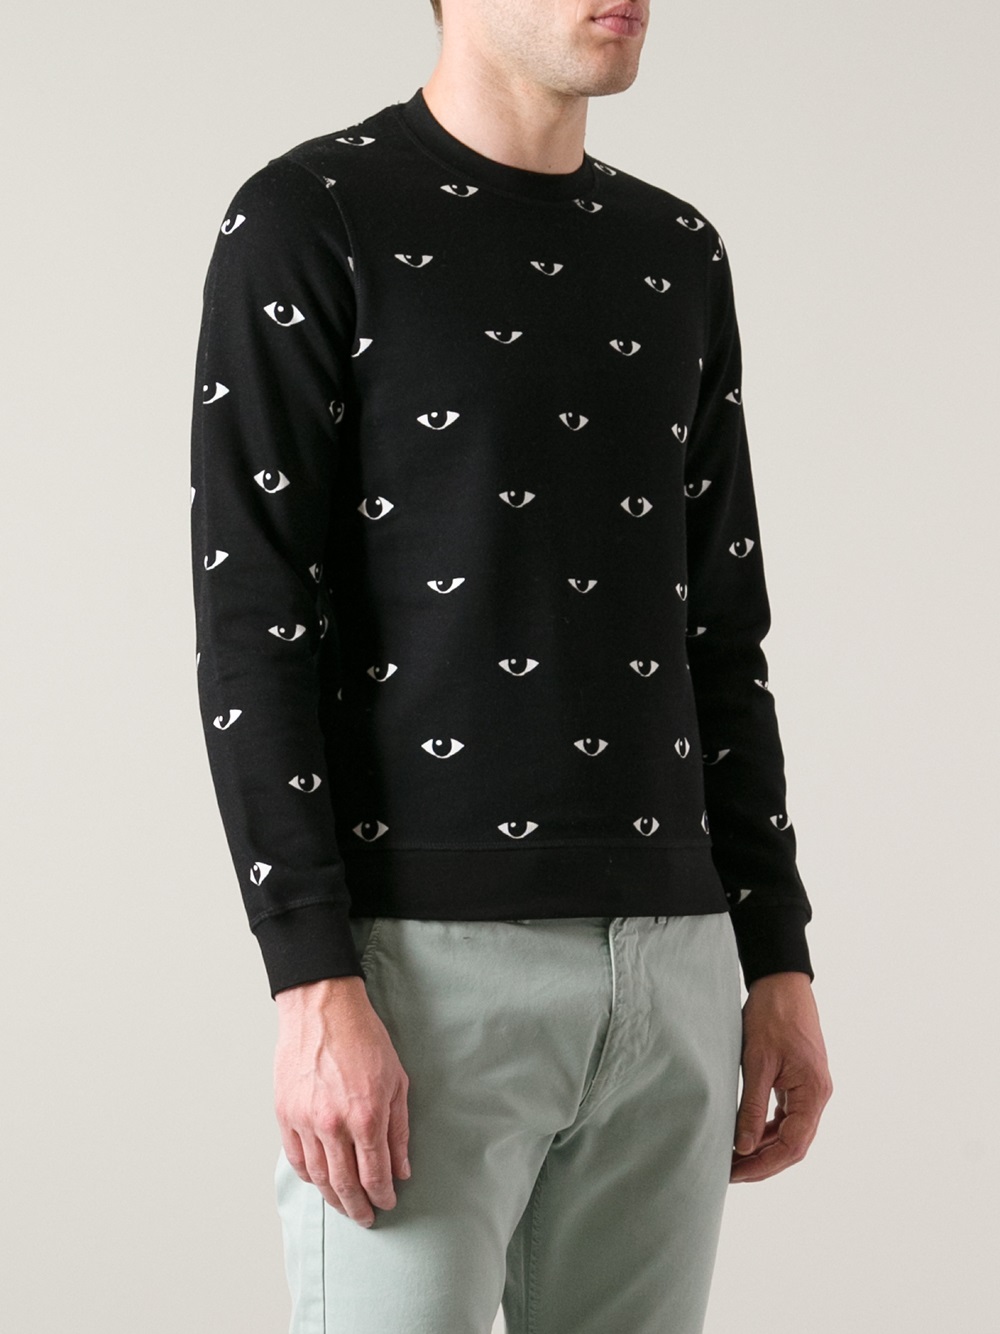 KENZO Eye Print Sweater in Black for Men - Lyst